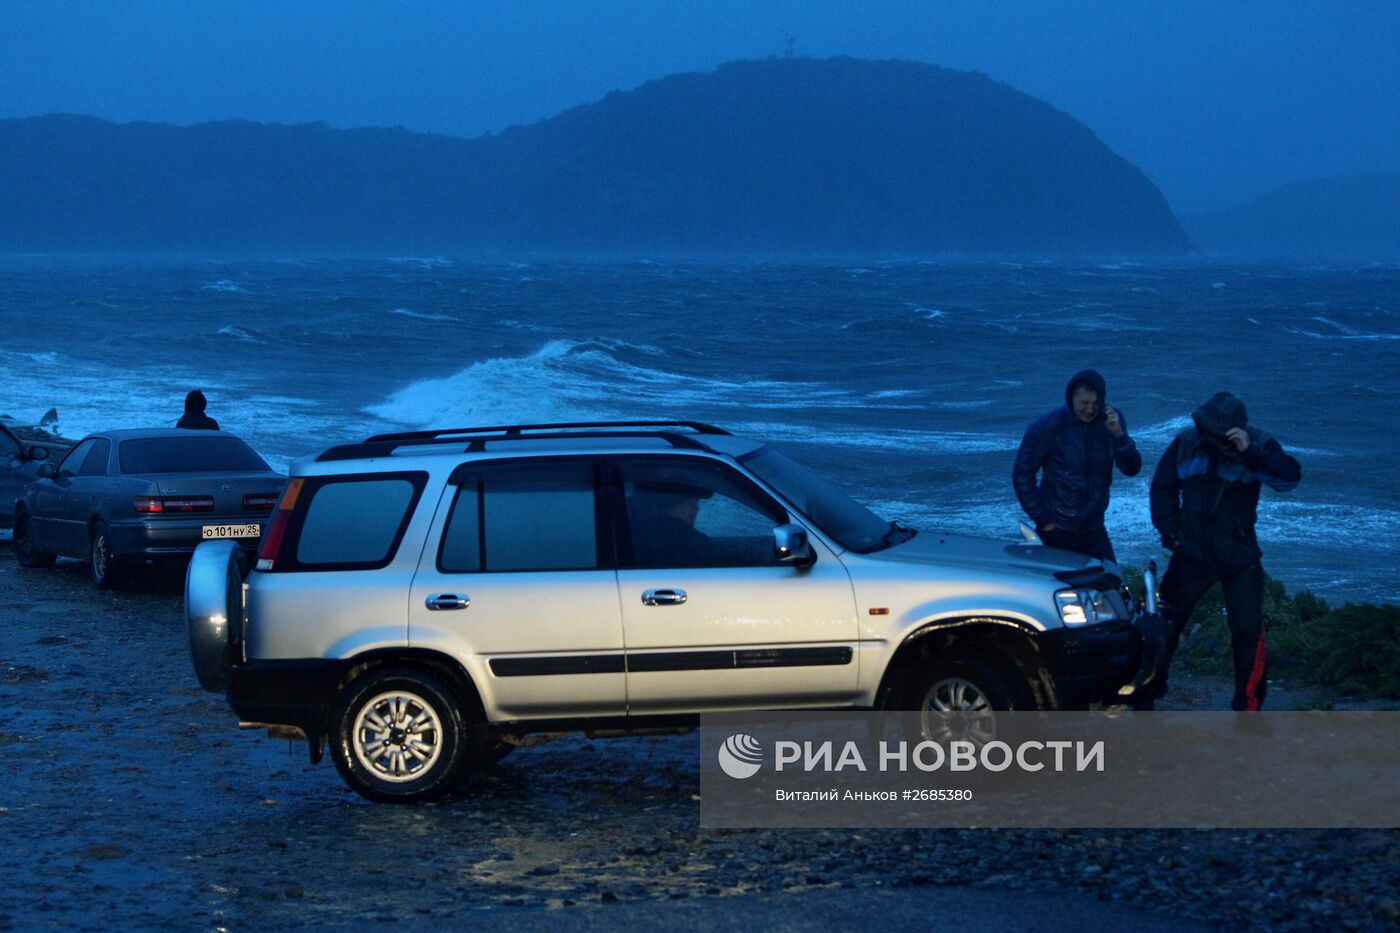 Тайфун "Гони" в Приморском крае